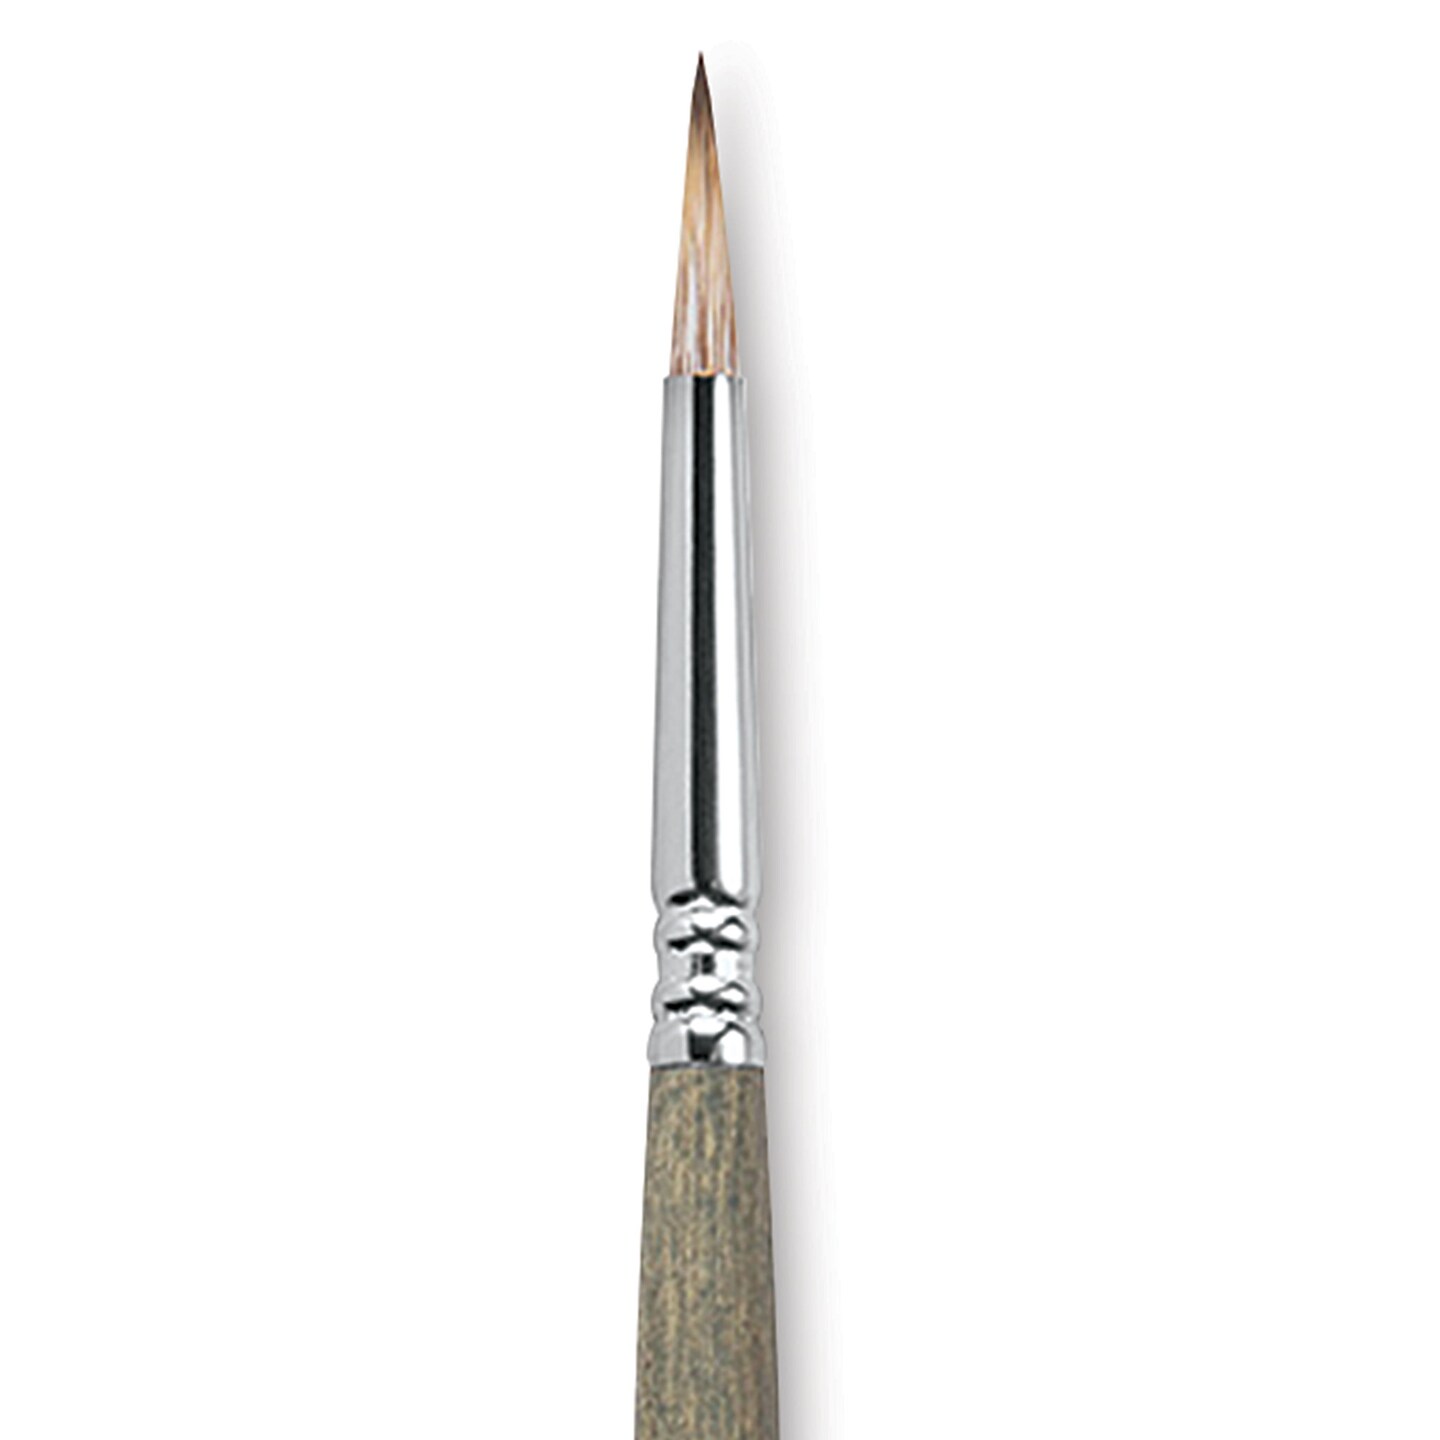 Escoda Modernista Tadami Synthetic Mongoose Brush - Round, Long Handle, Size 6